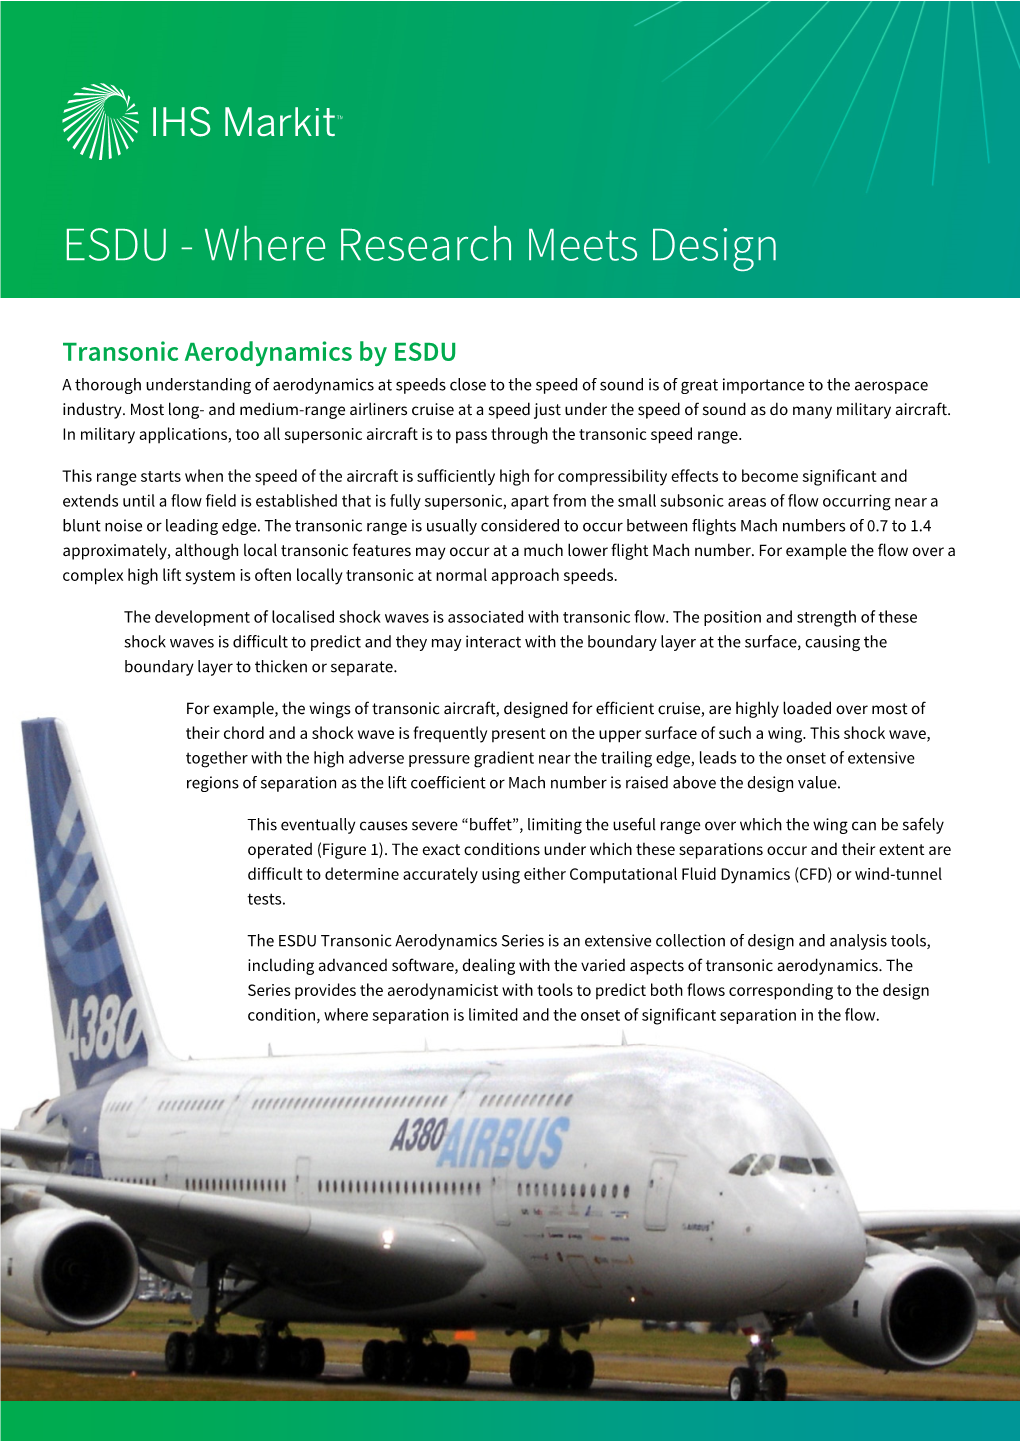 ESDU Transonic Aerodynamics Research Meets Design